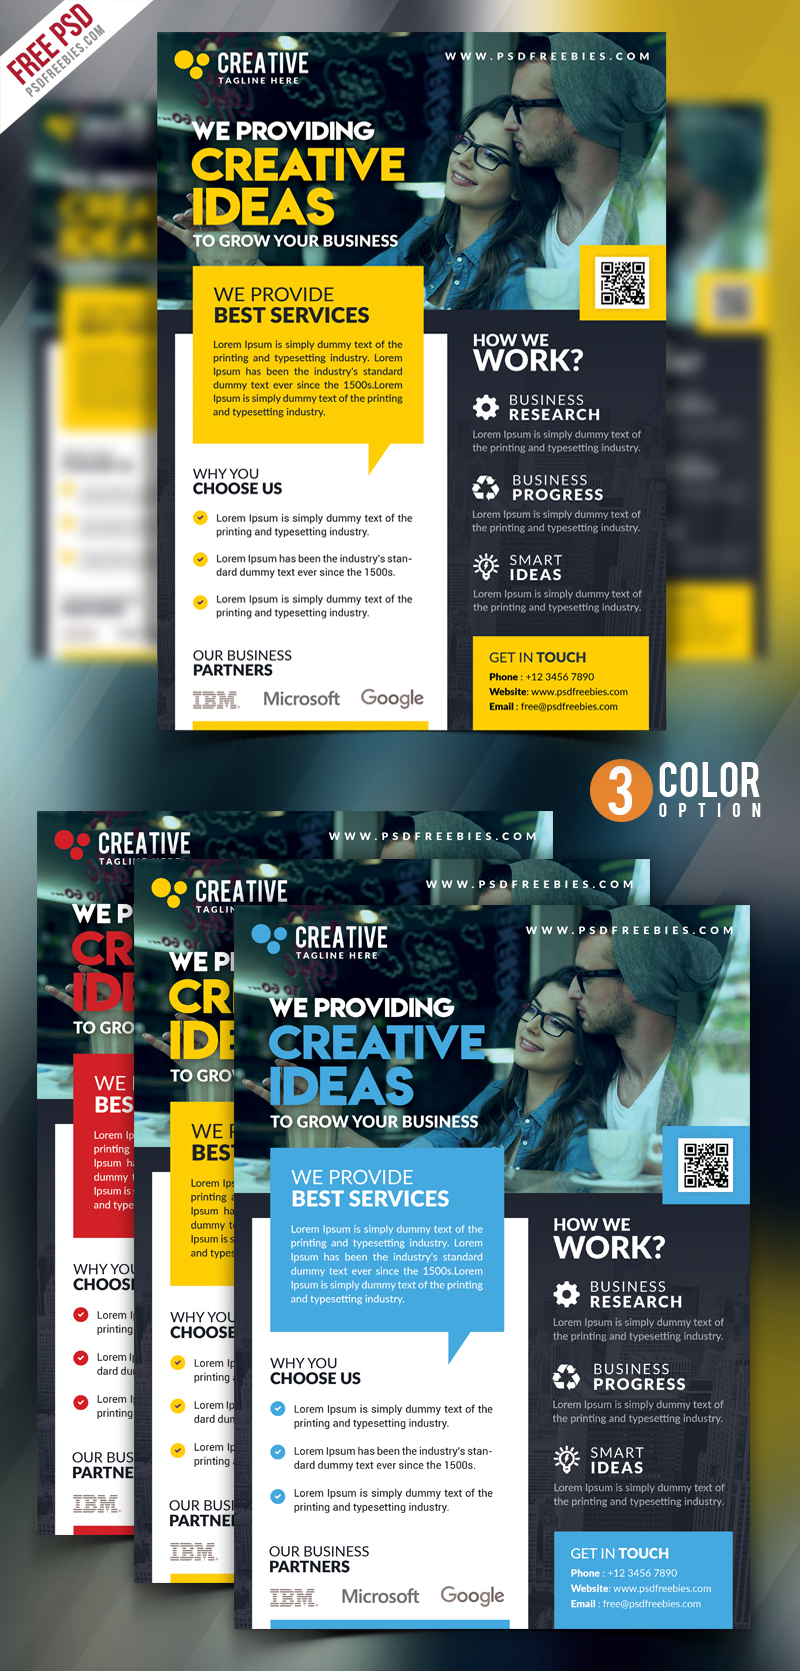 free psd psd freebie psd flyer corporate flyer business flyer psd budle photoshop flyer template Creative Design